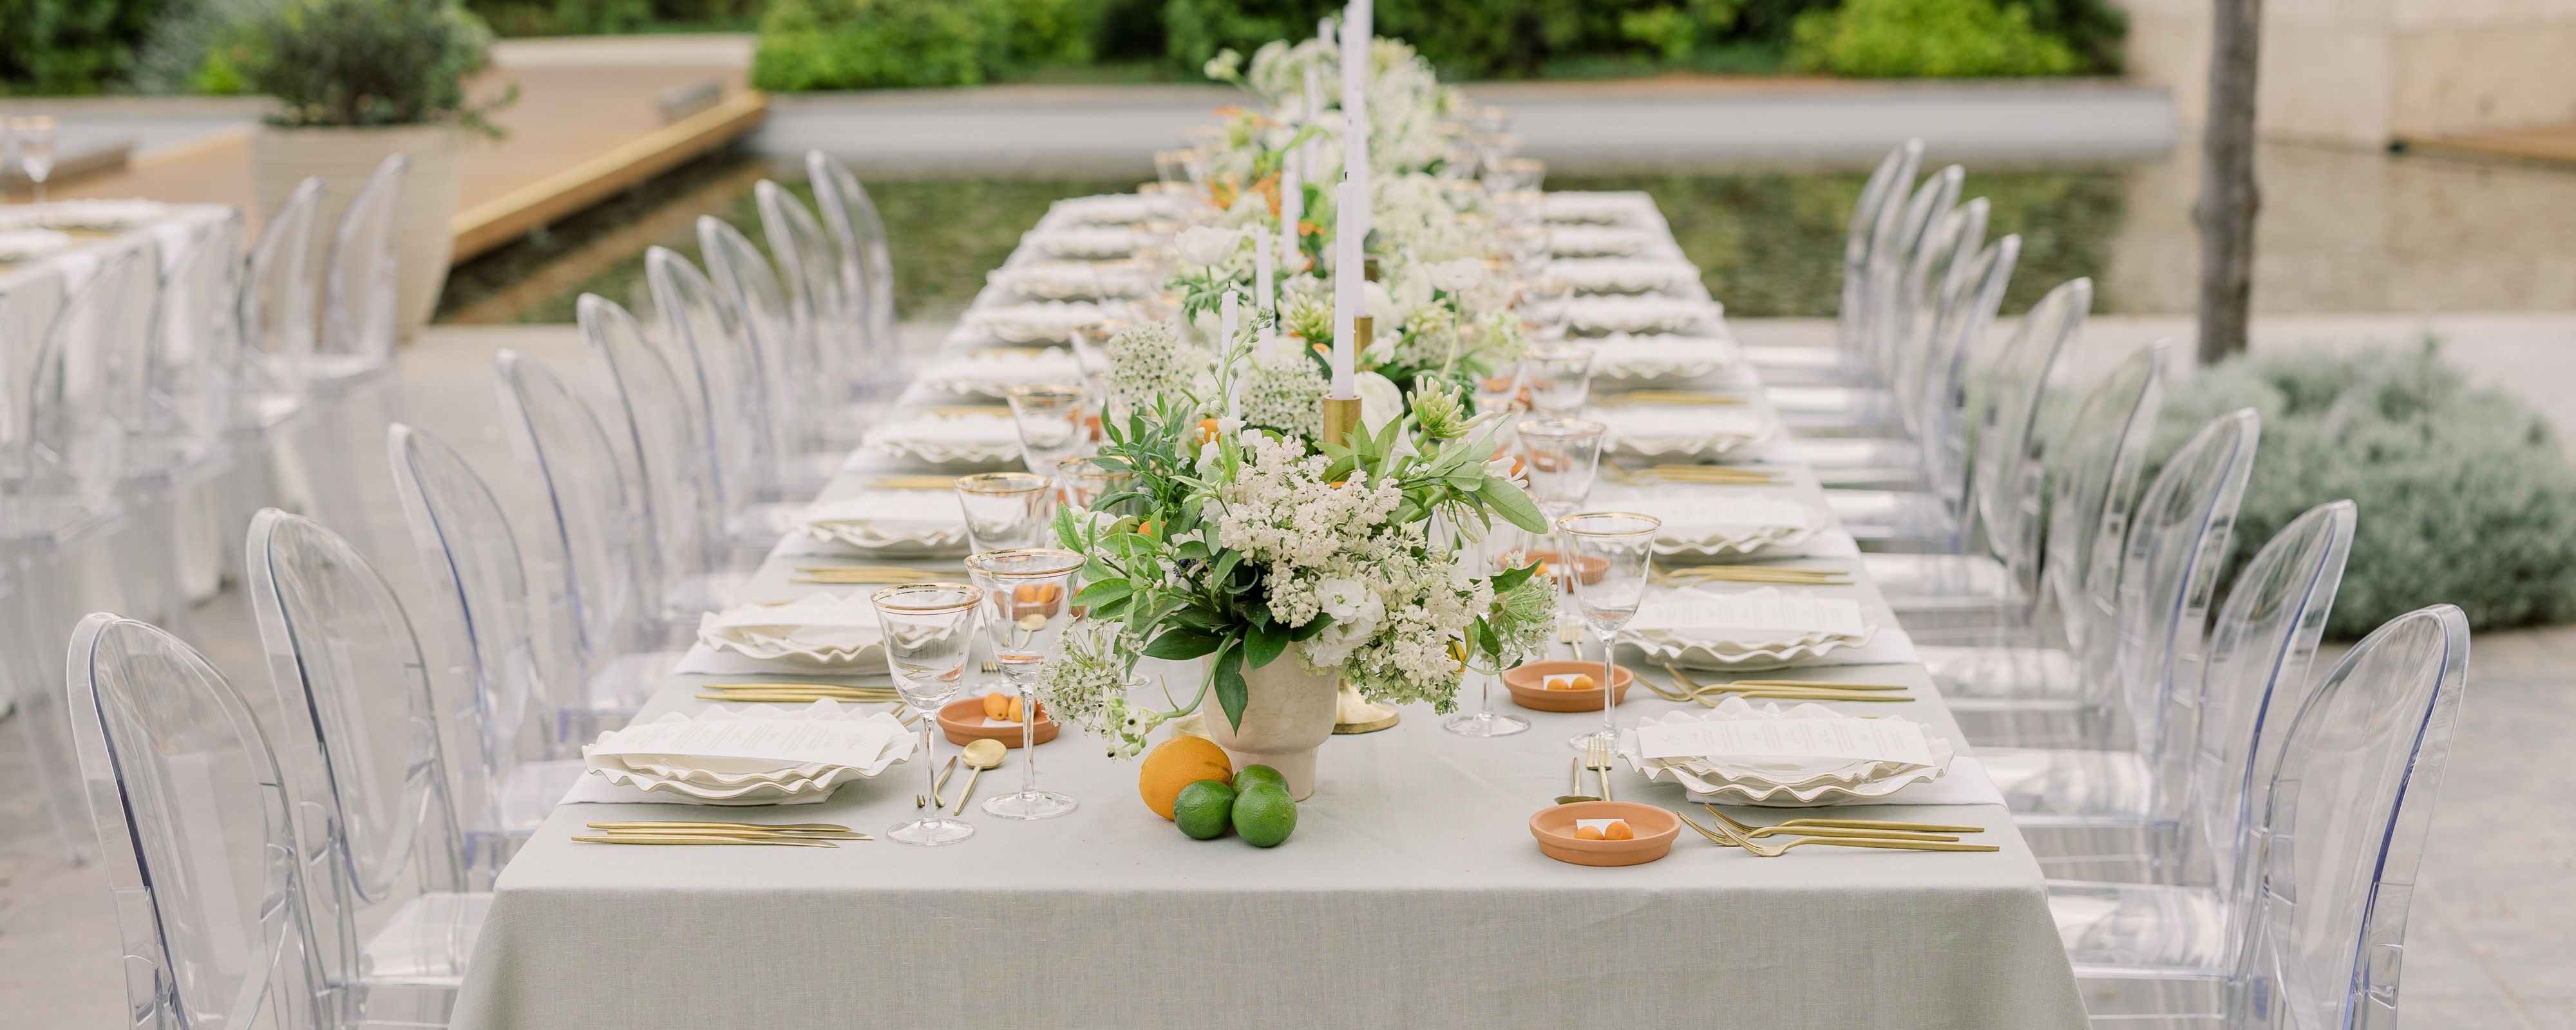 Outdoor wedding table